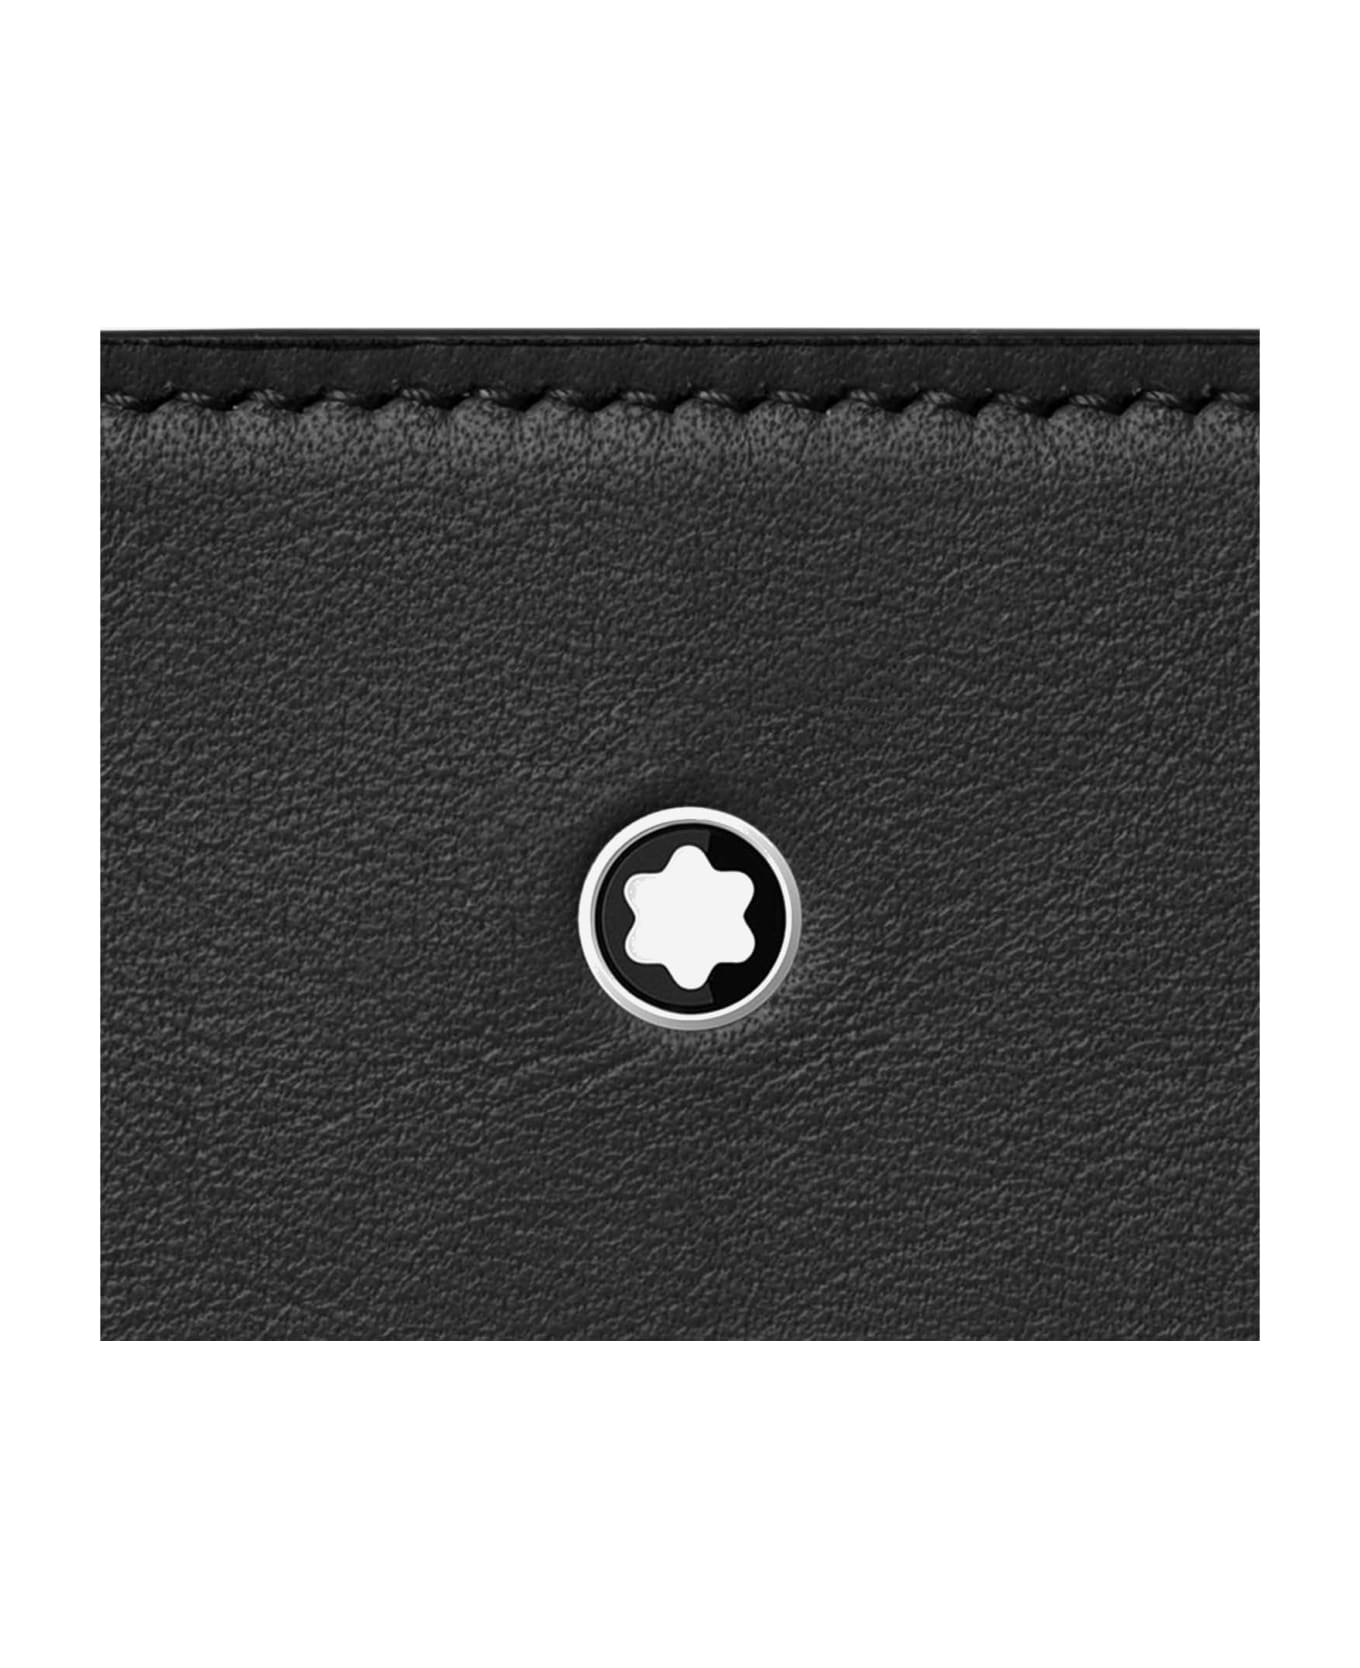 Montblanc Double Smartphone Case Meisterstück Selection Soft - Black